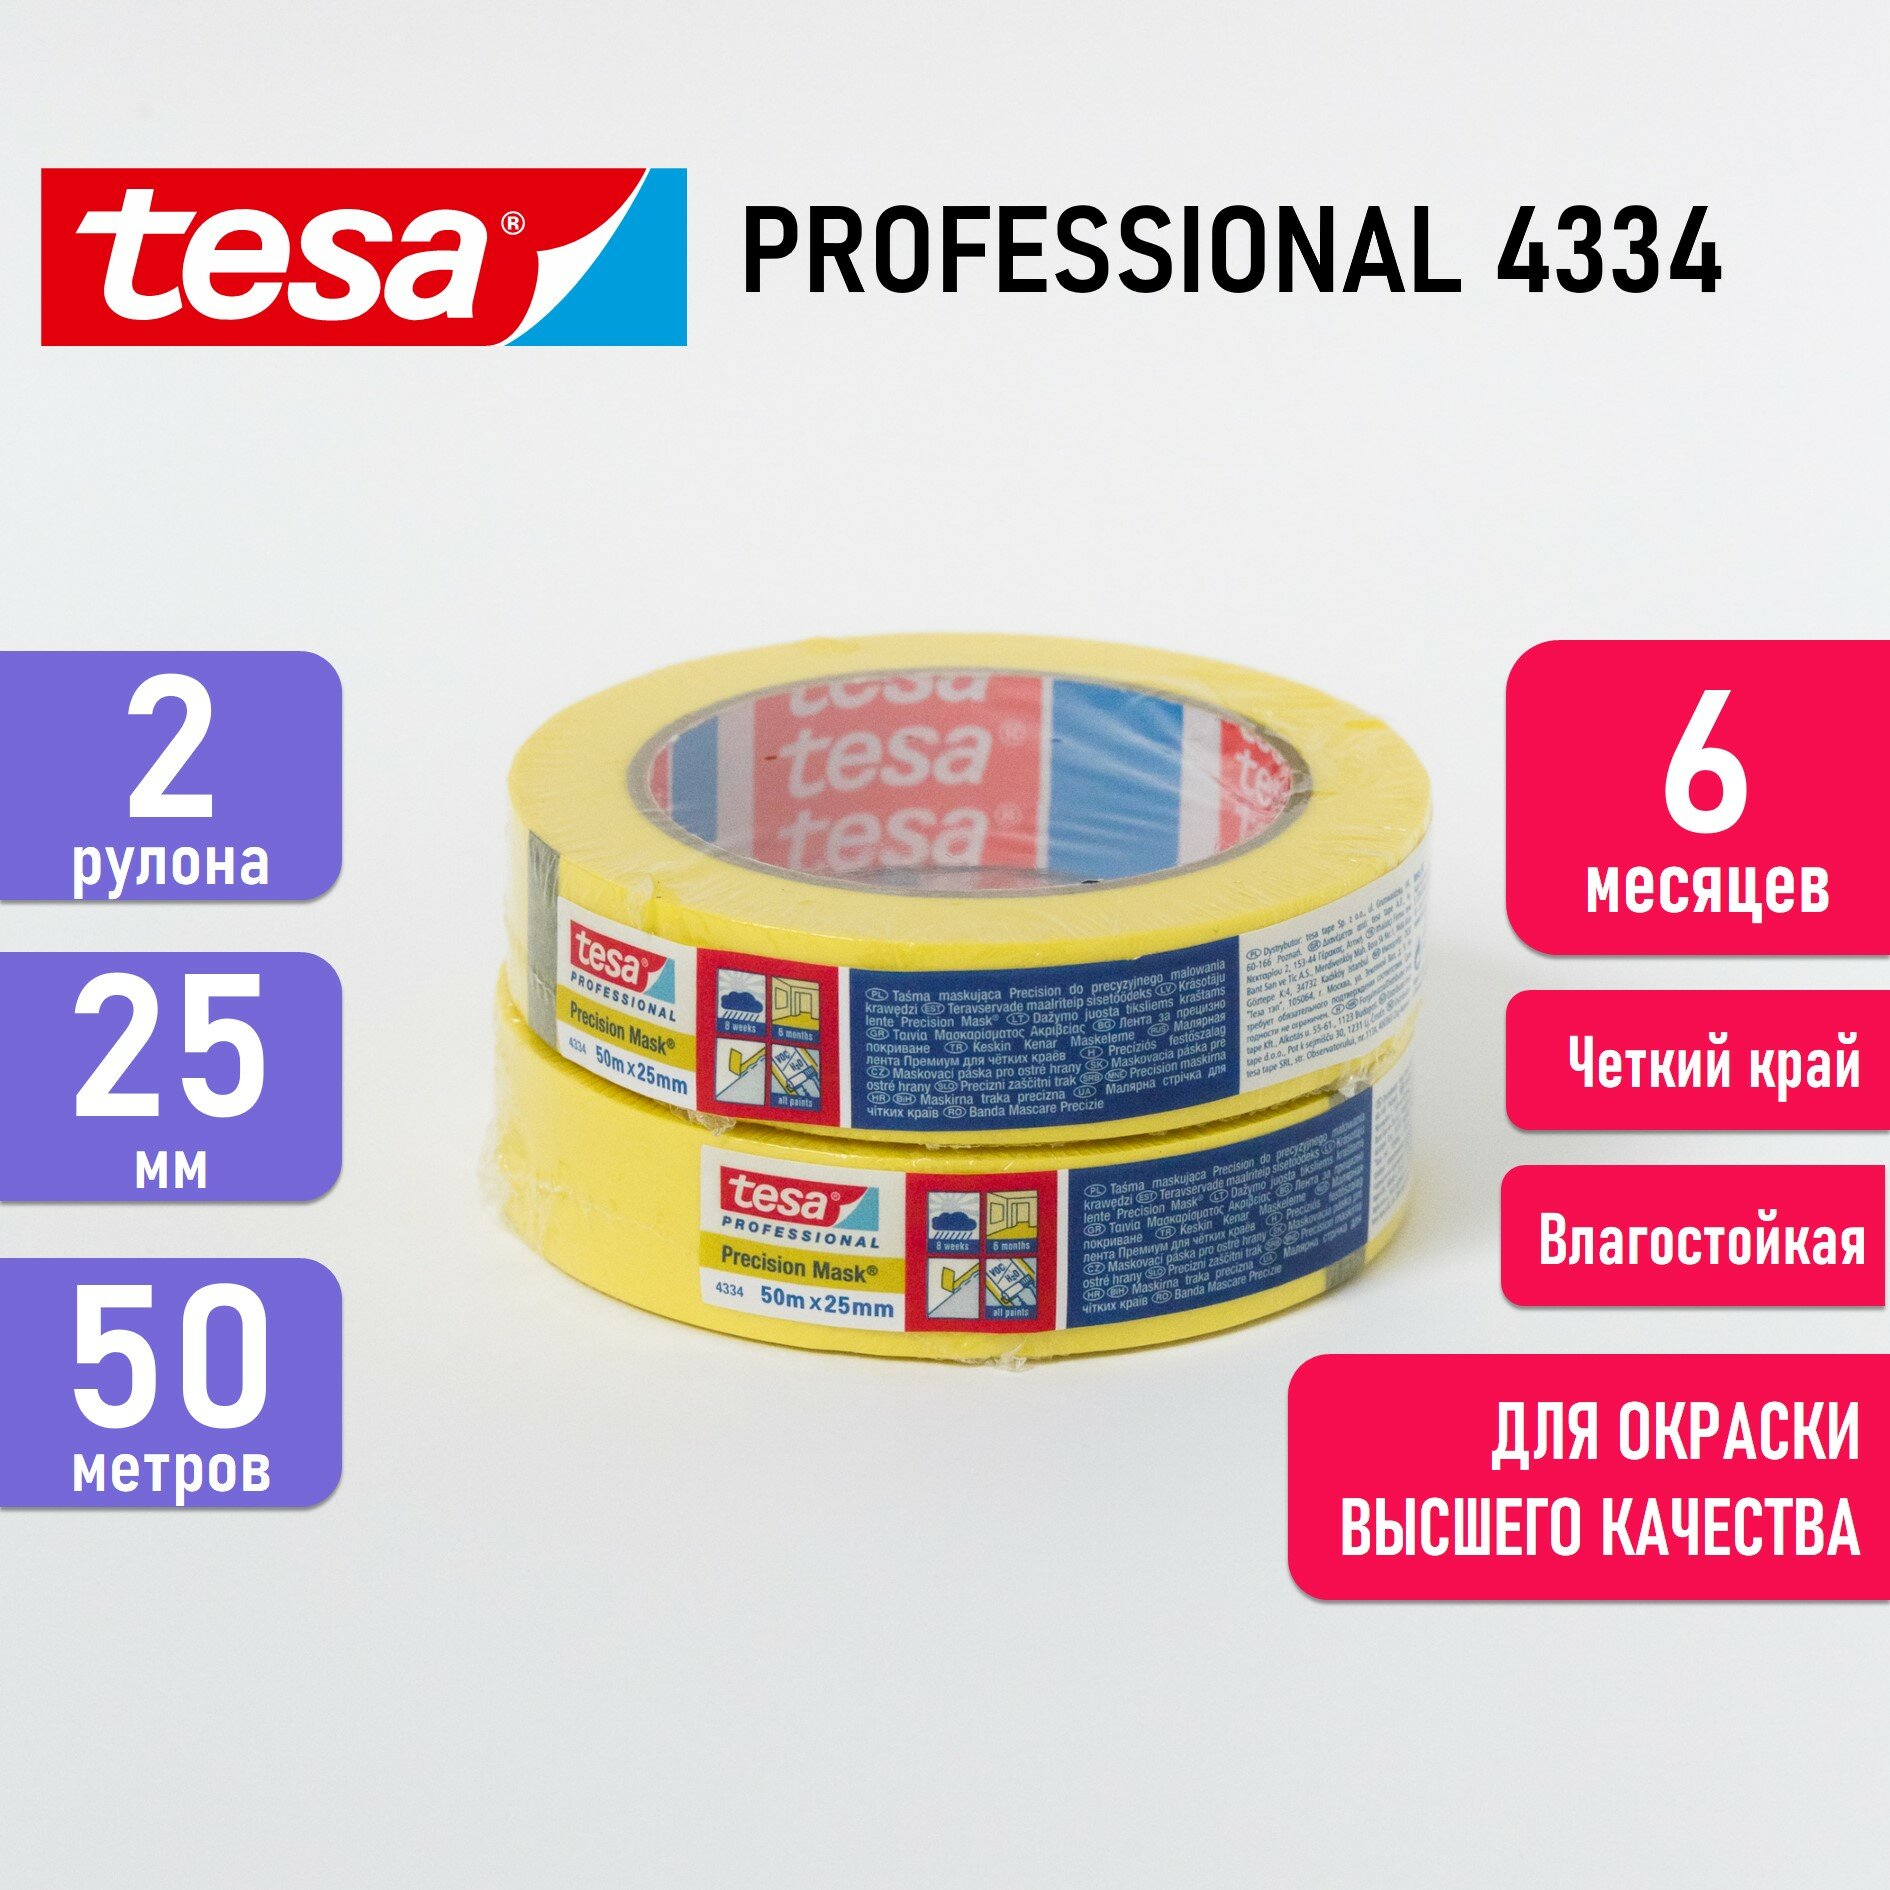 Малярная лента TESA желтая для четких краев, TESA 4334 четкий край, 25 мм х 50 метров (6 месяцев), оригинал - 2 шт